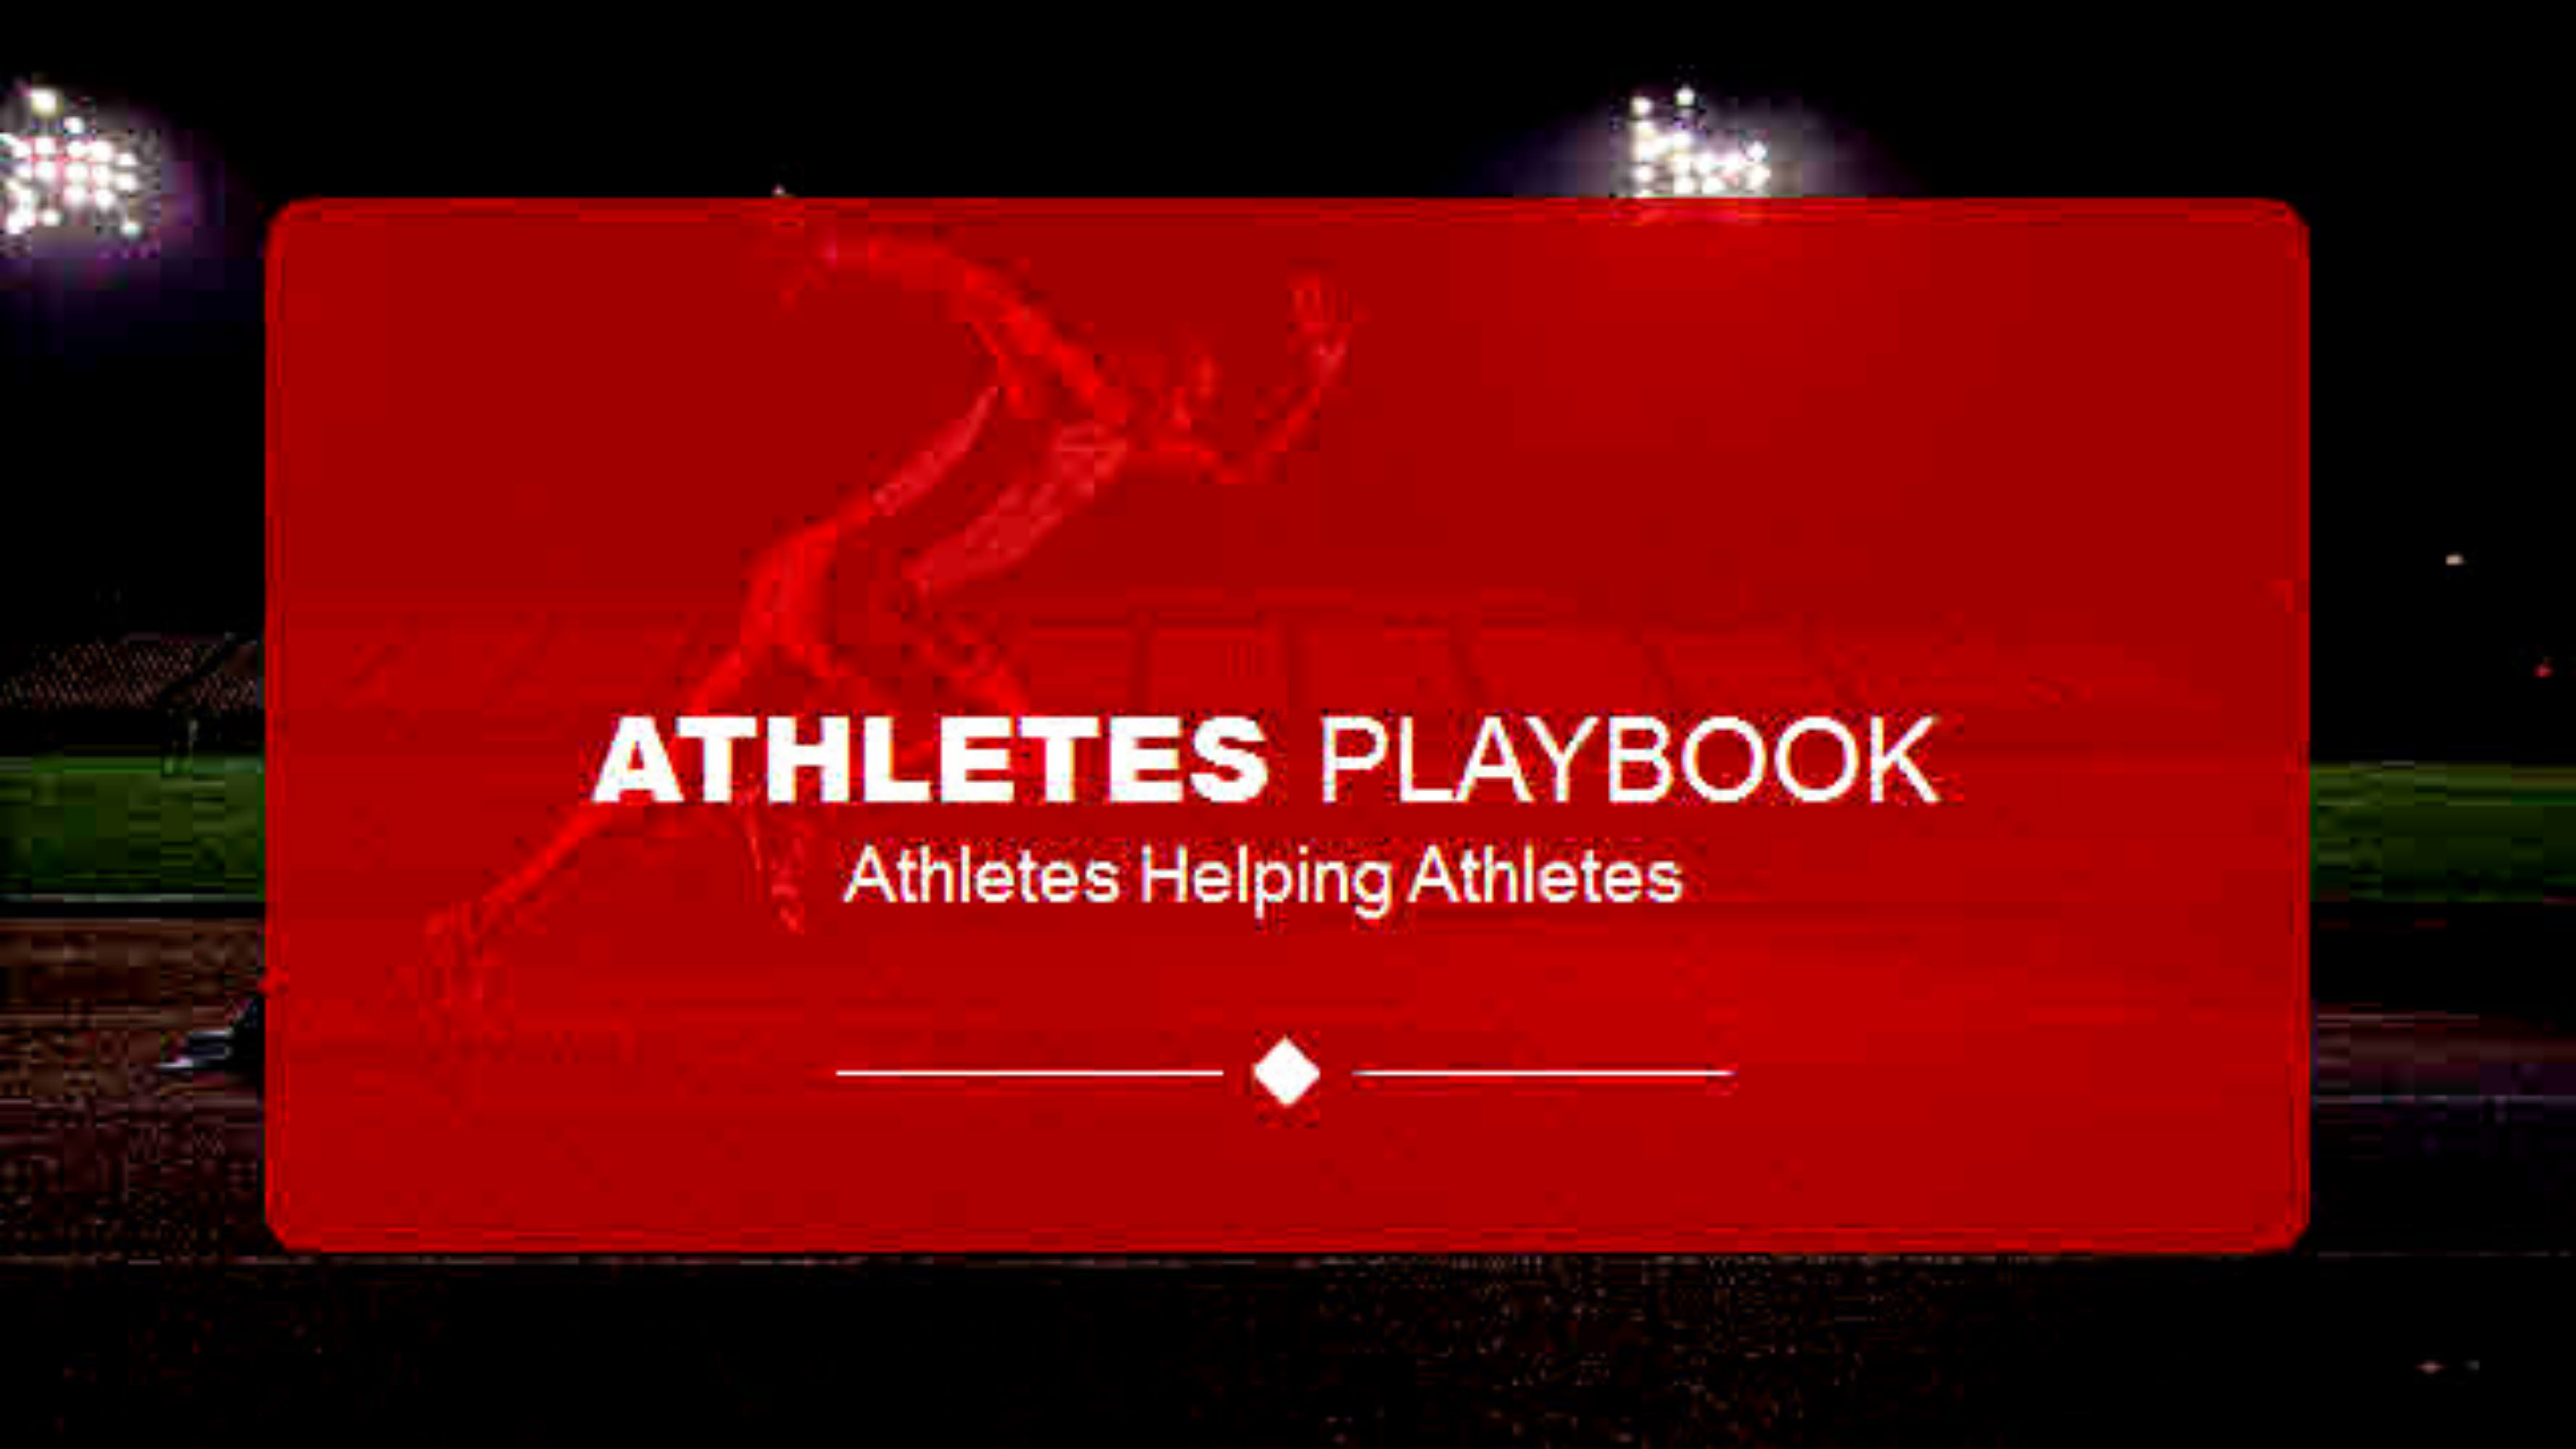 The Athletes Playbook: Athletes Helping Athletes